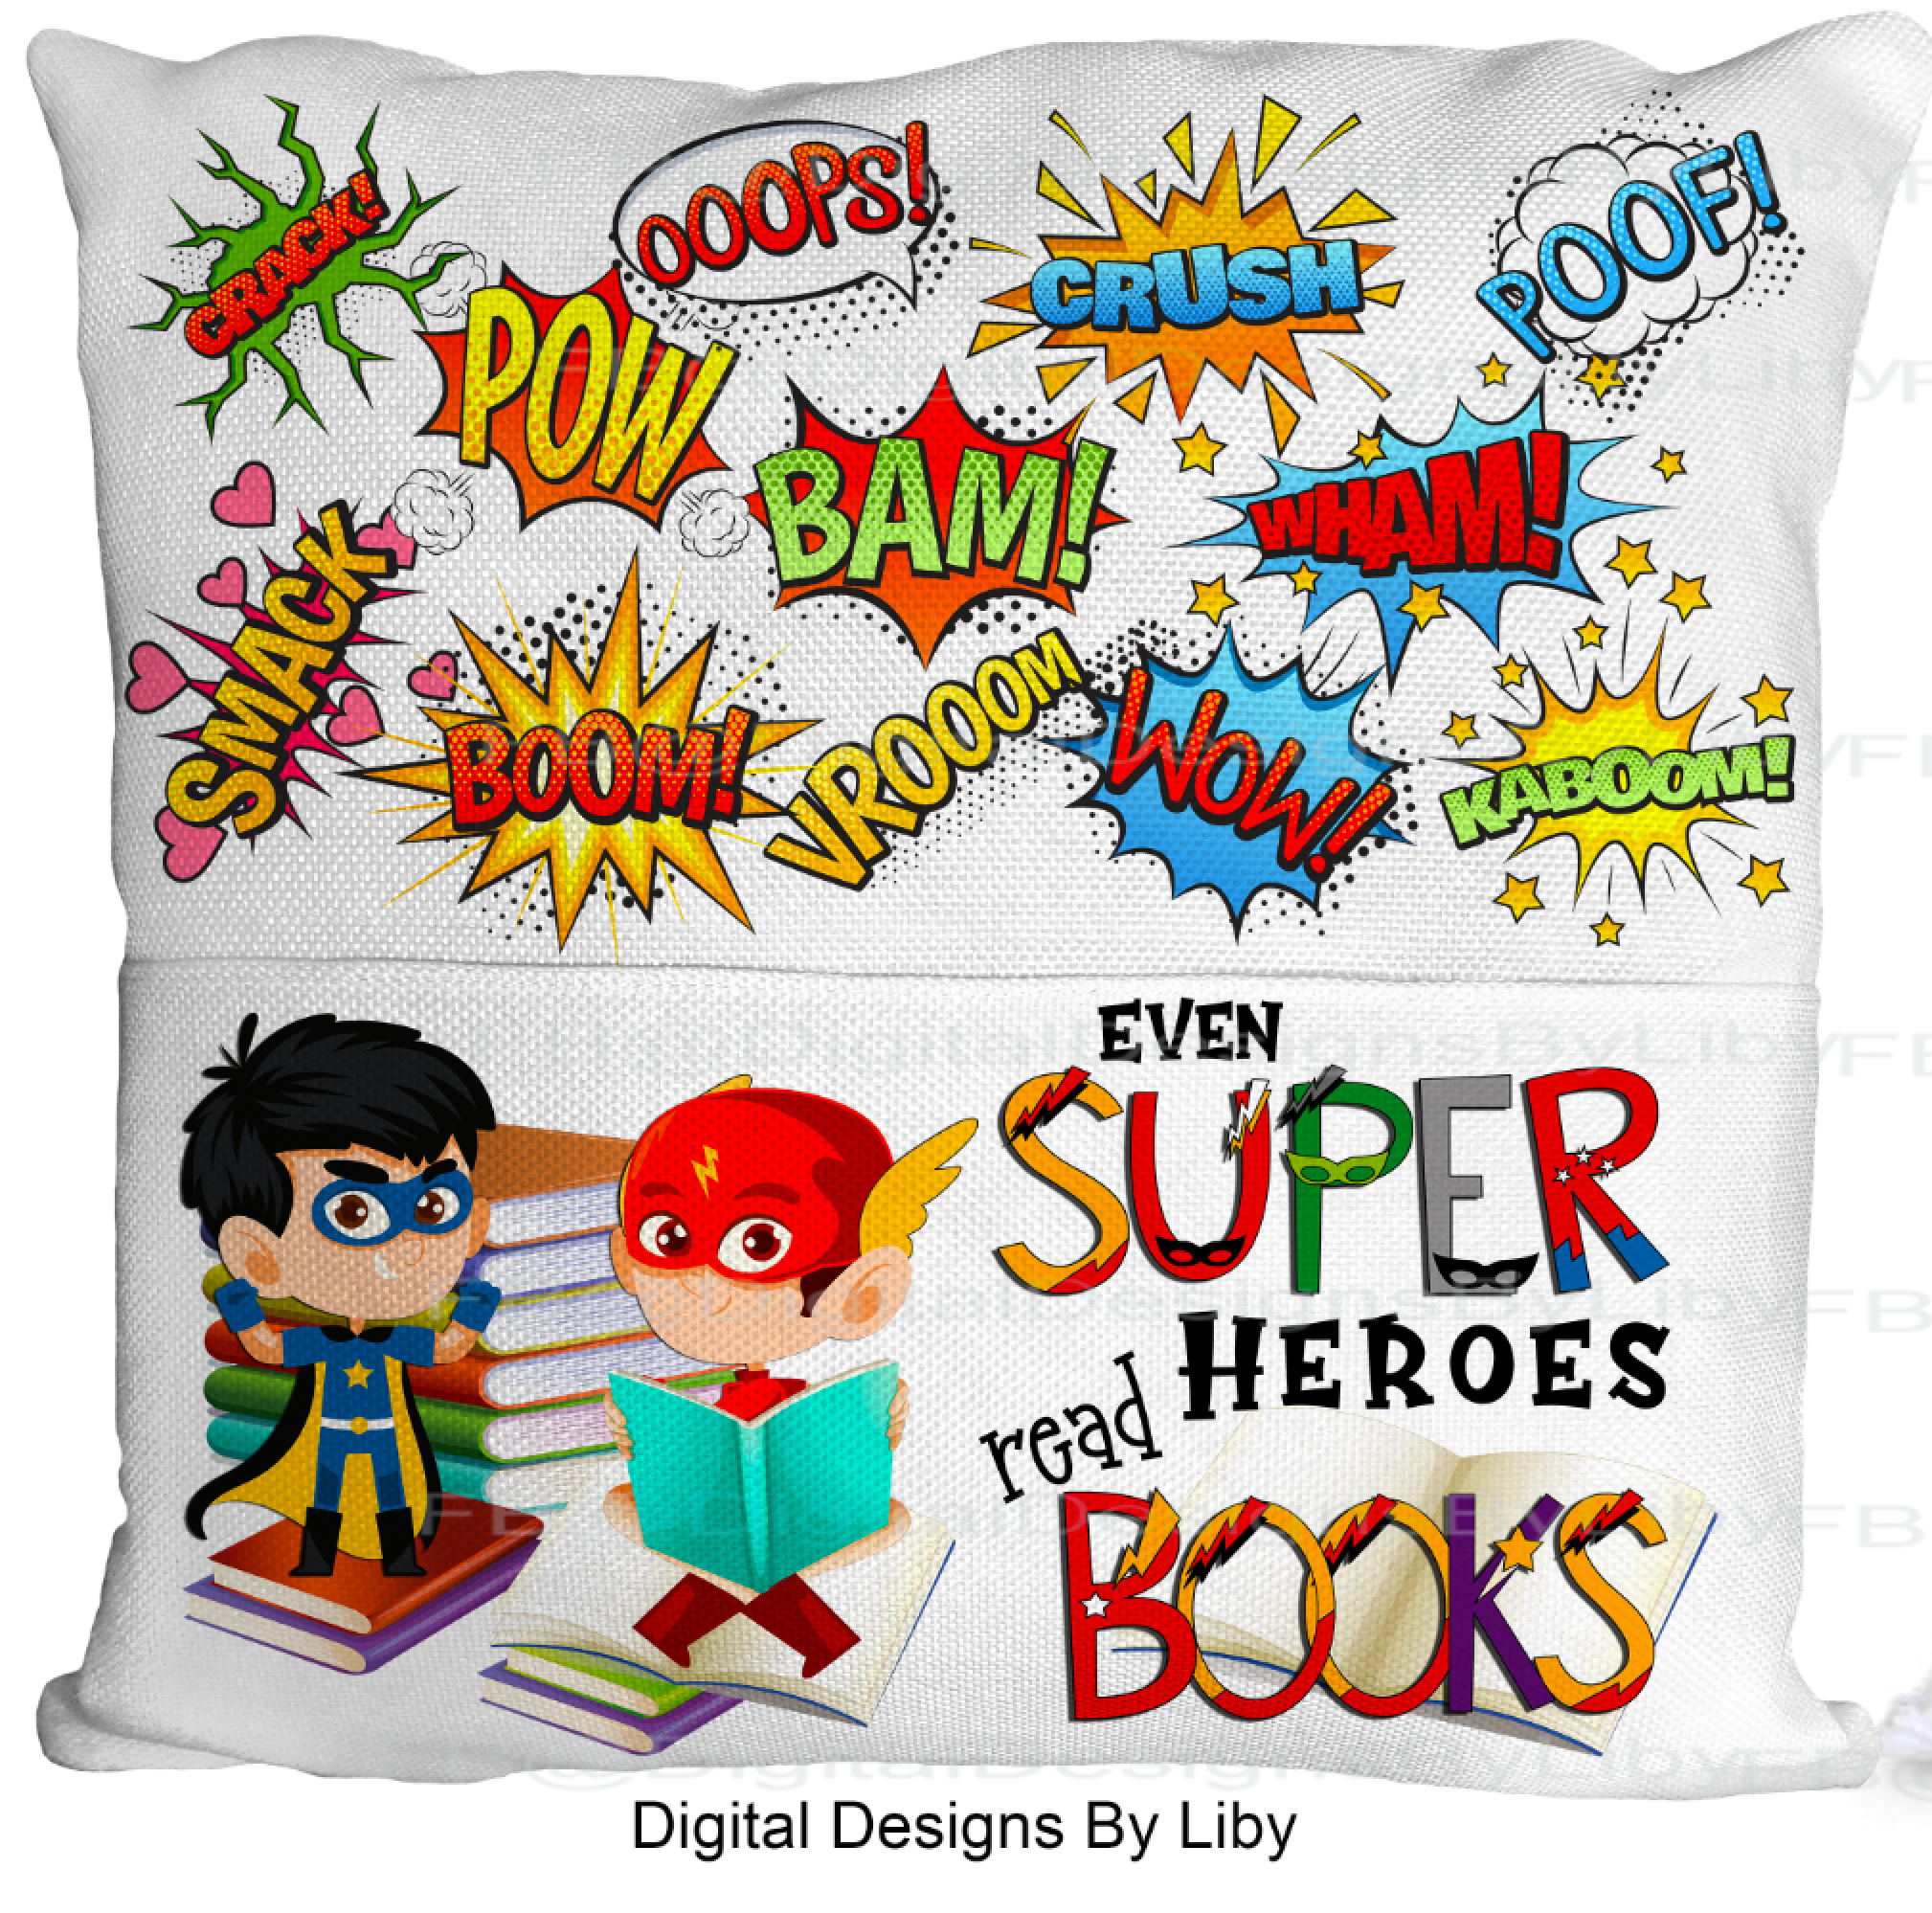 SUPER HEROES READ-BOYS VERSION (Light & Dark skin Designs)